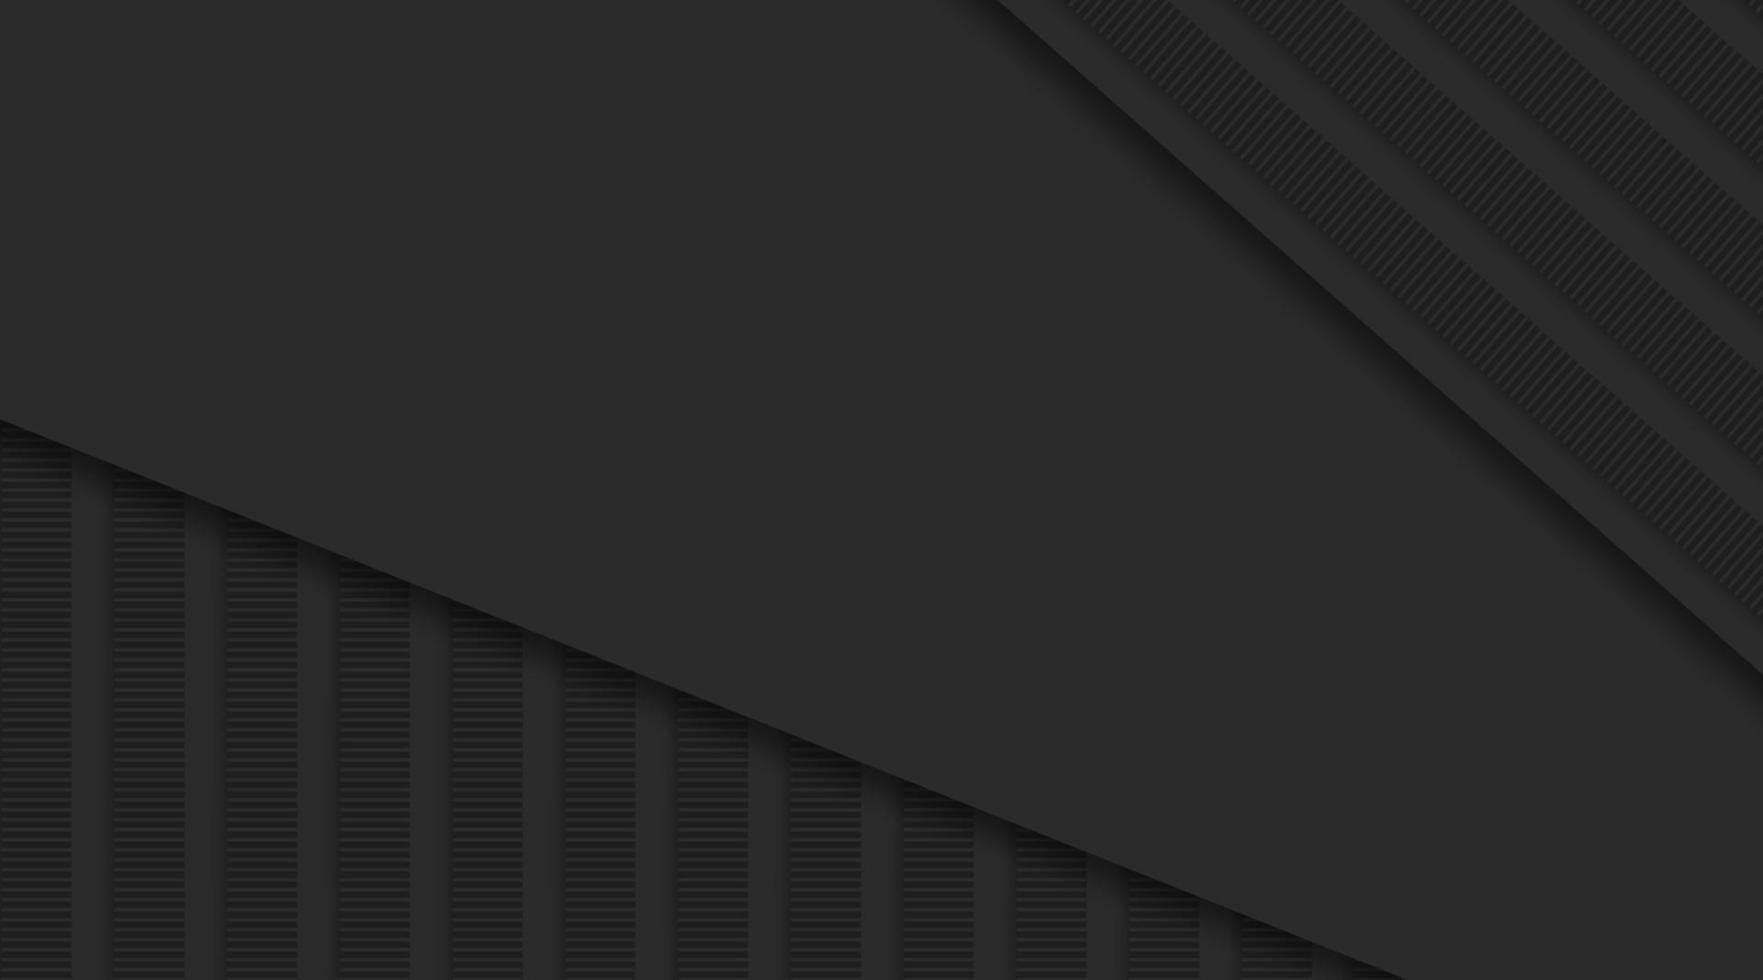 simple vector background, black stripe